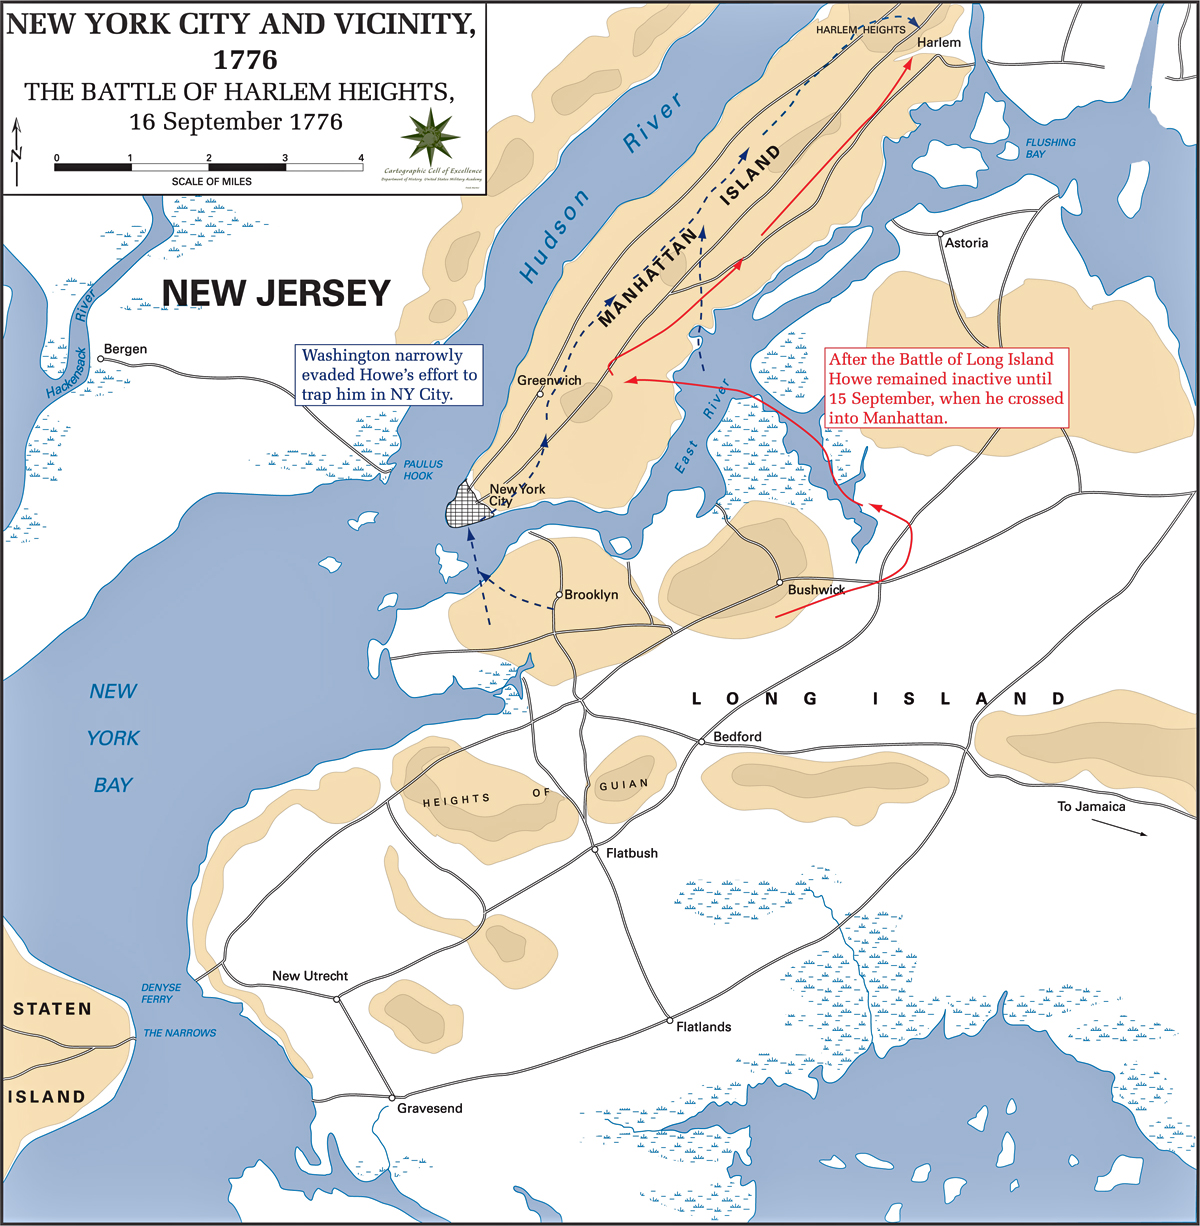 Map of the Battle of Harlem Heights - September 16, 1776